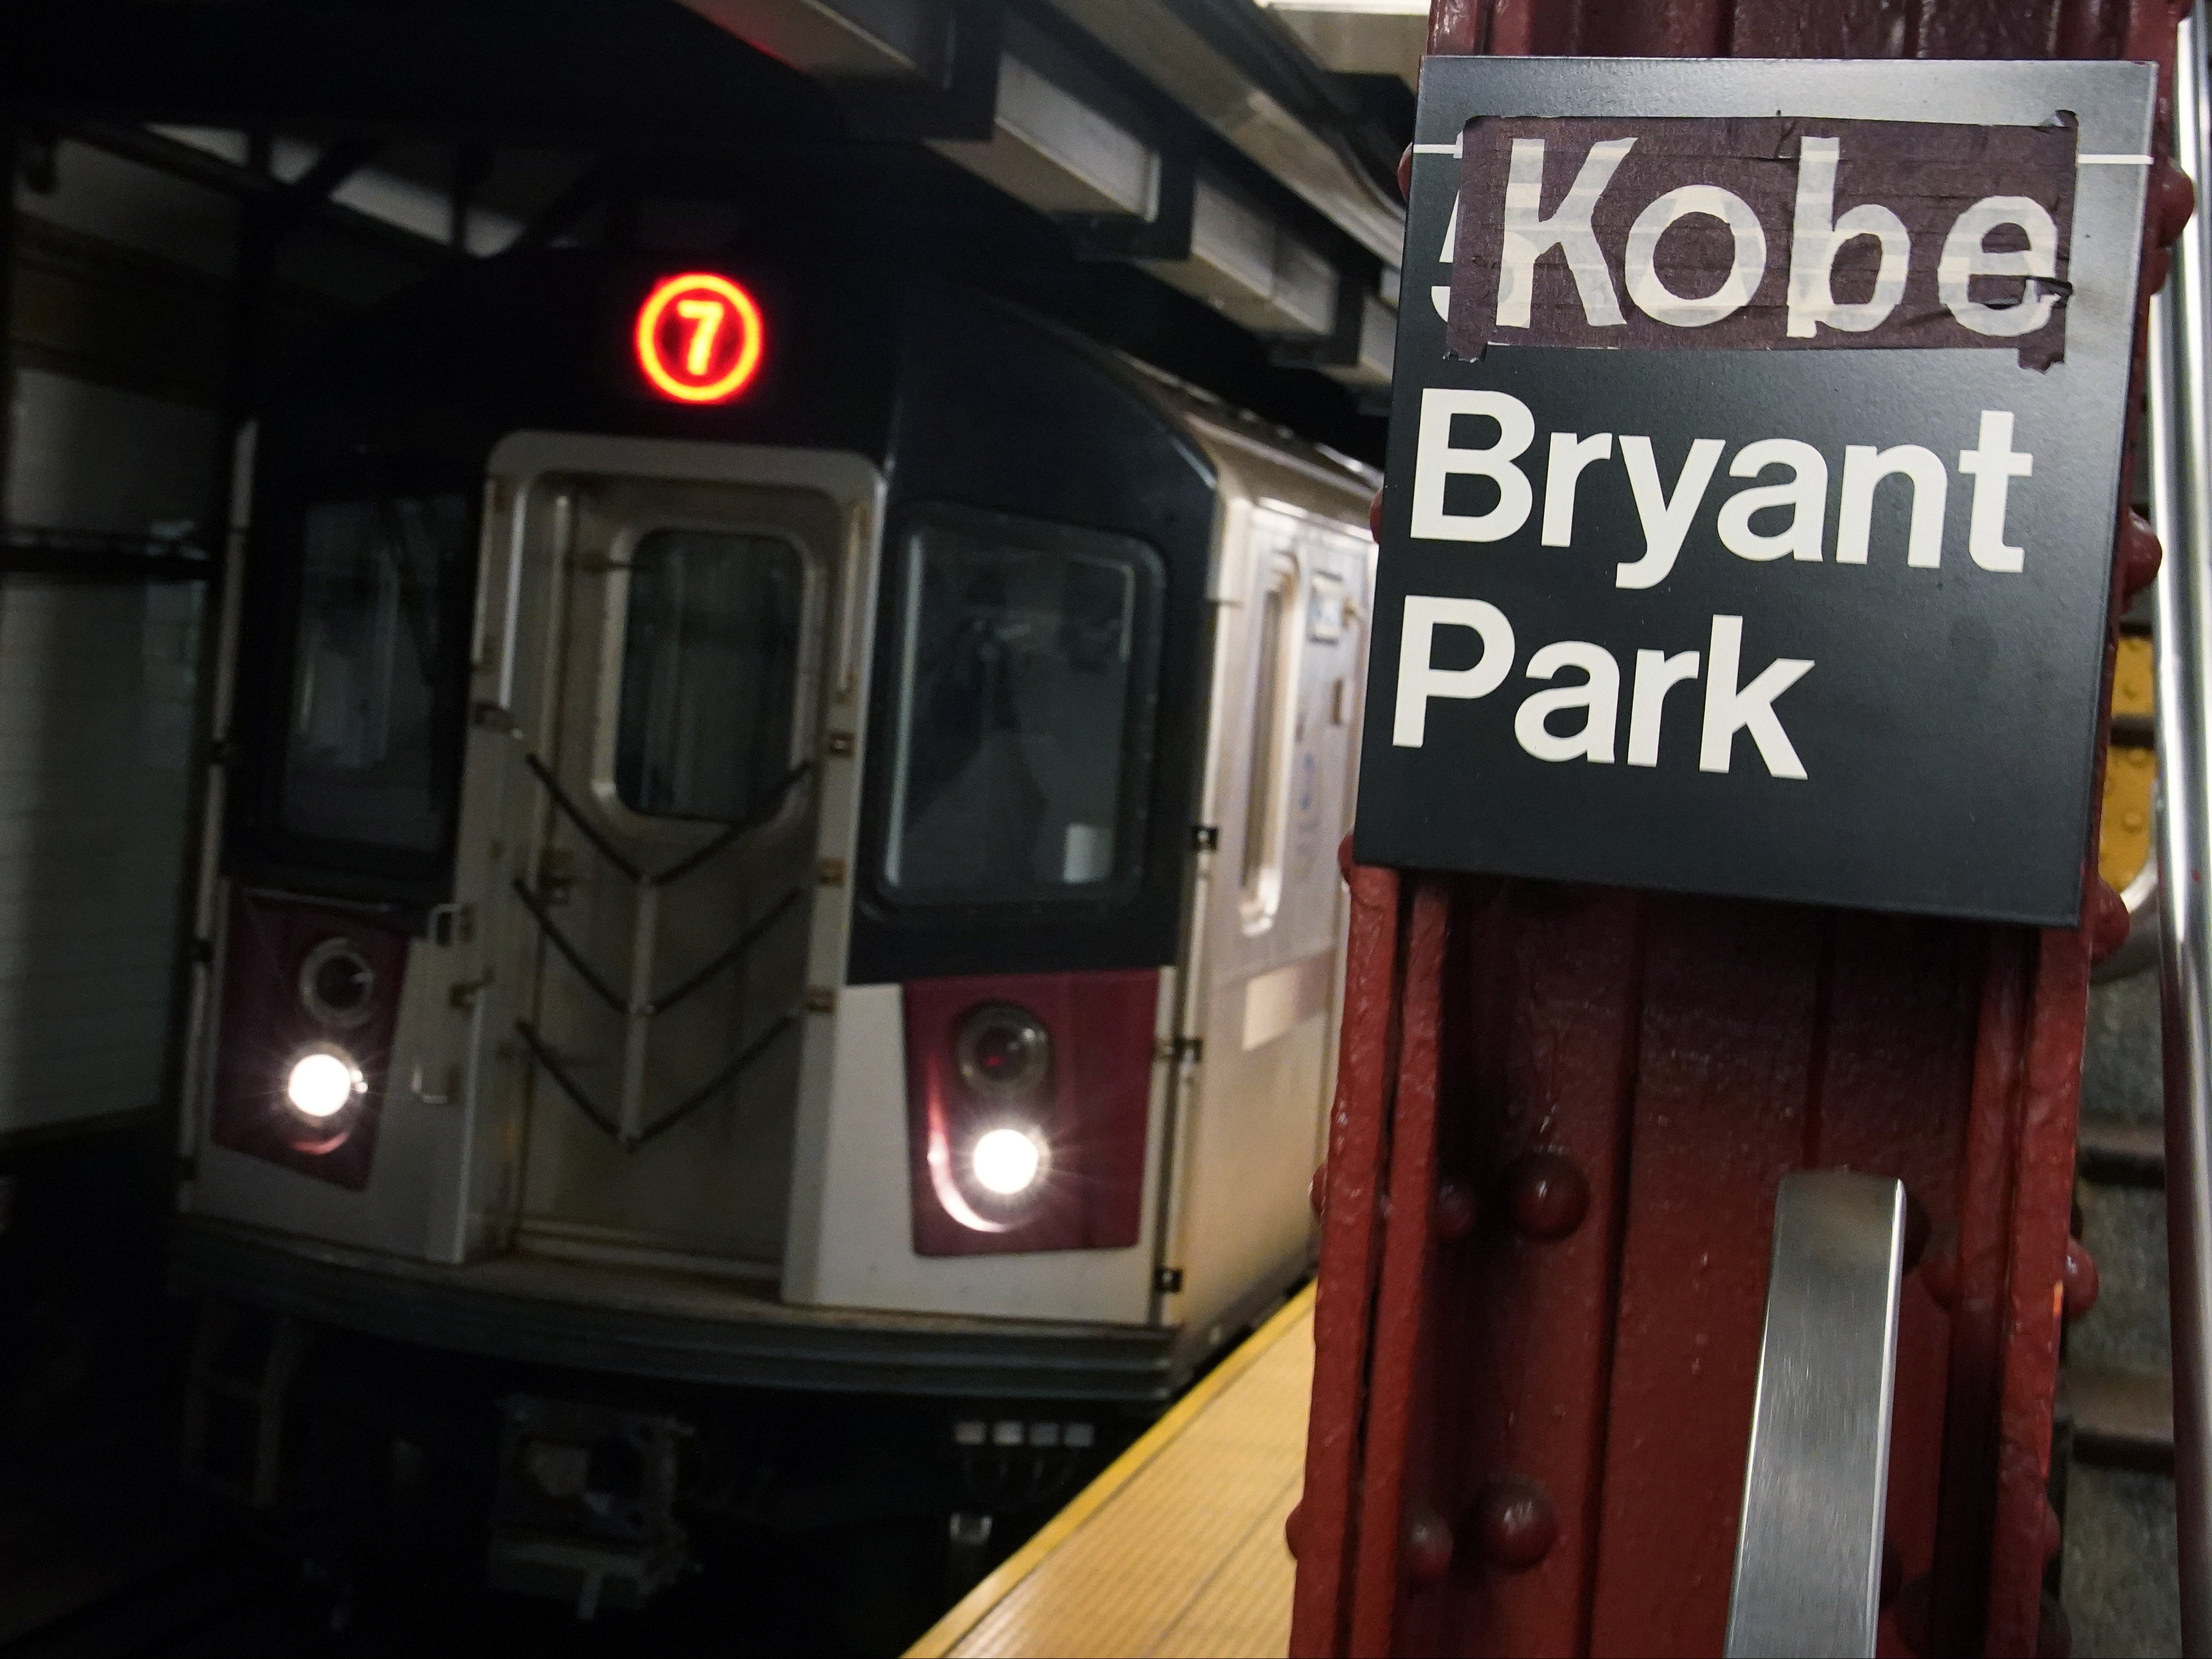 A New York City subway